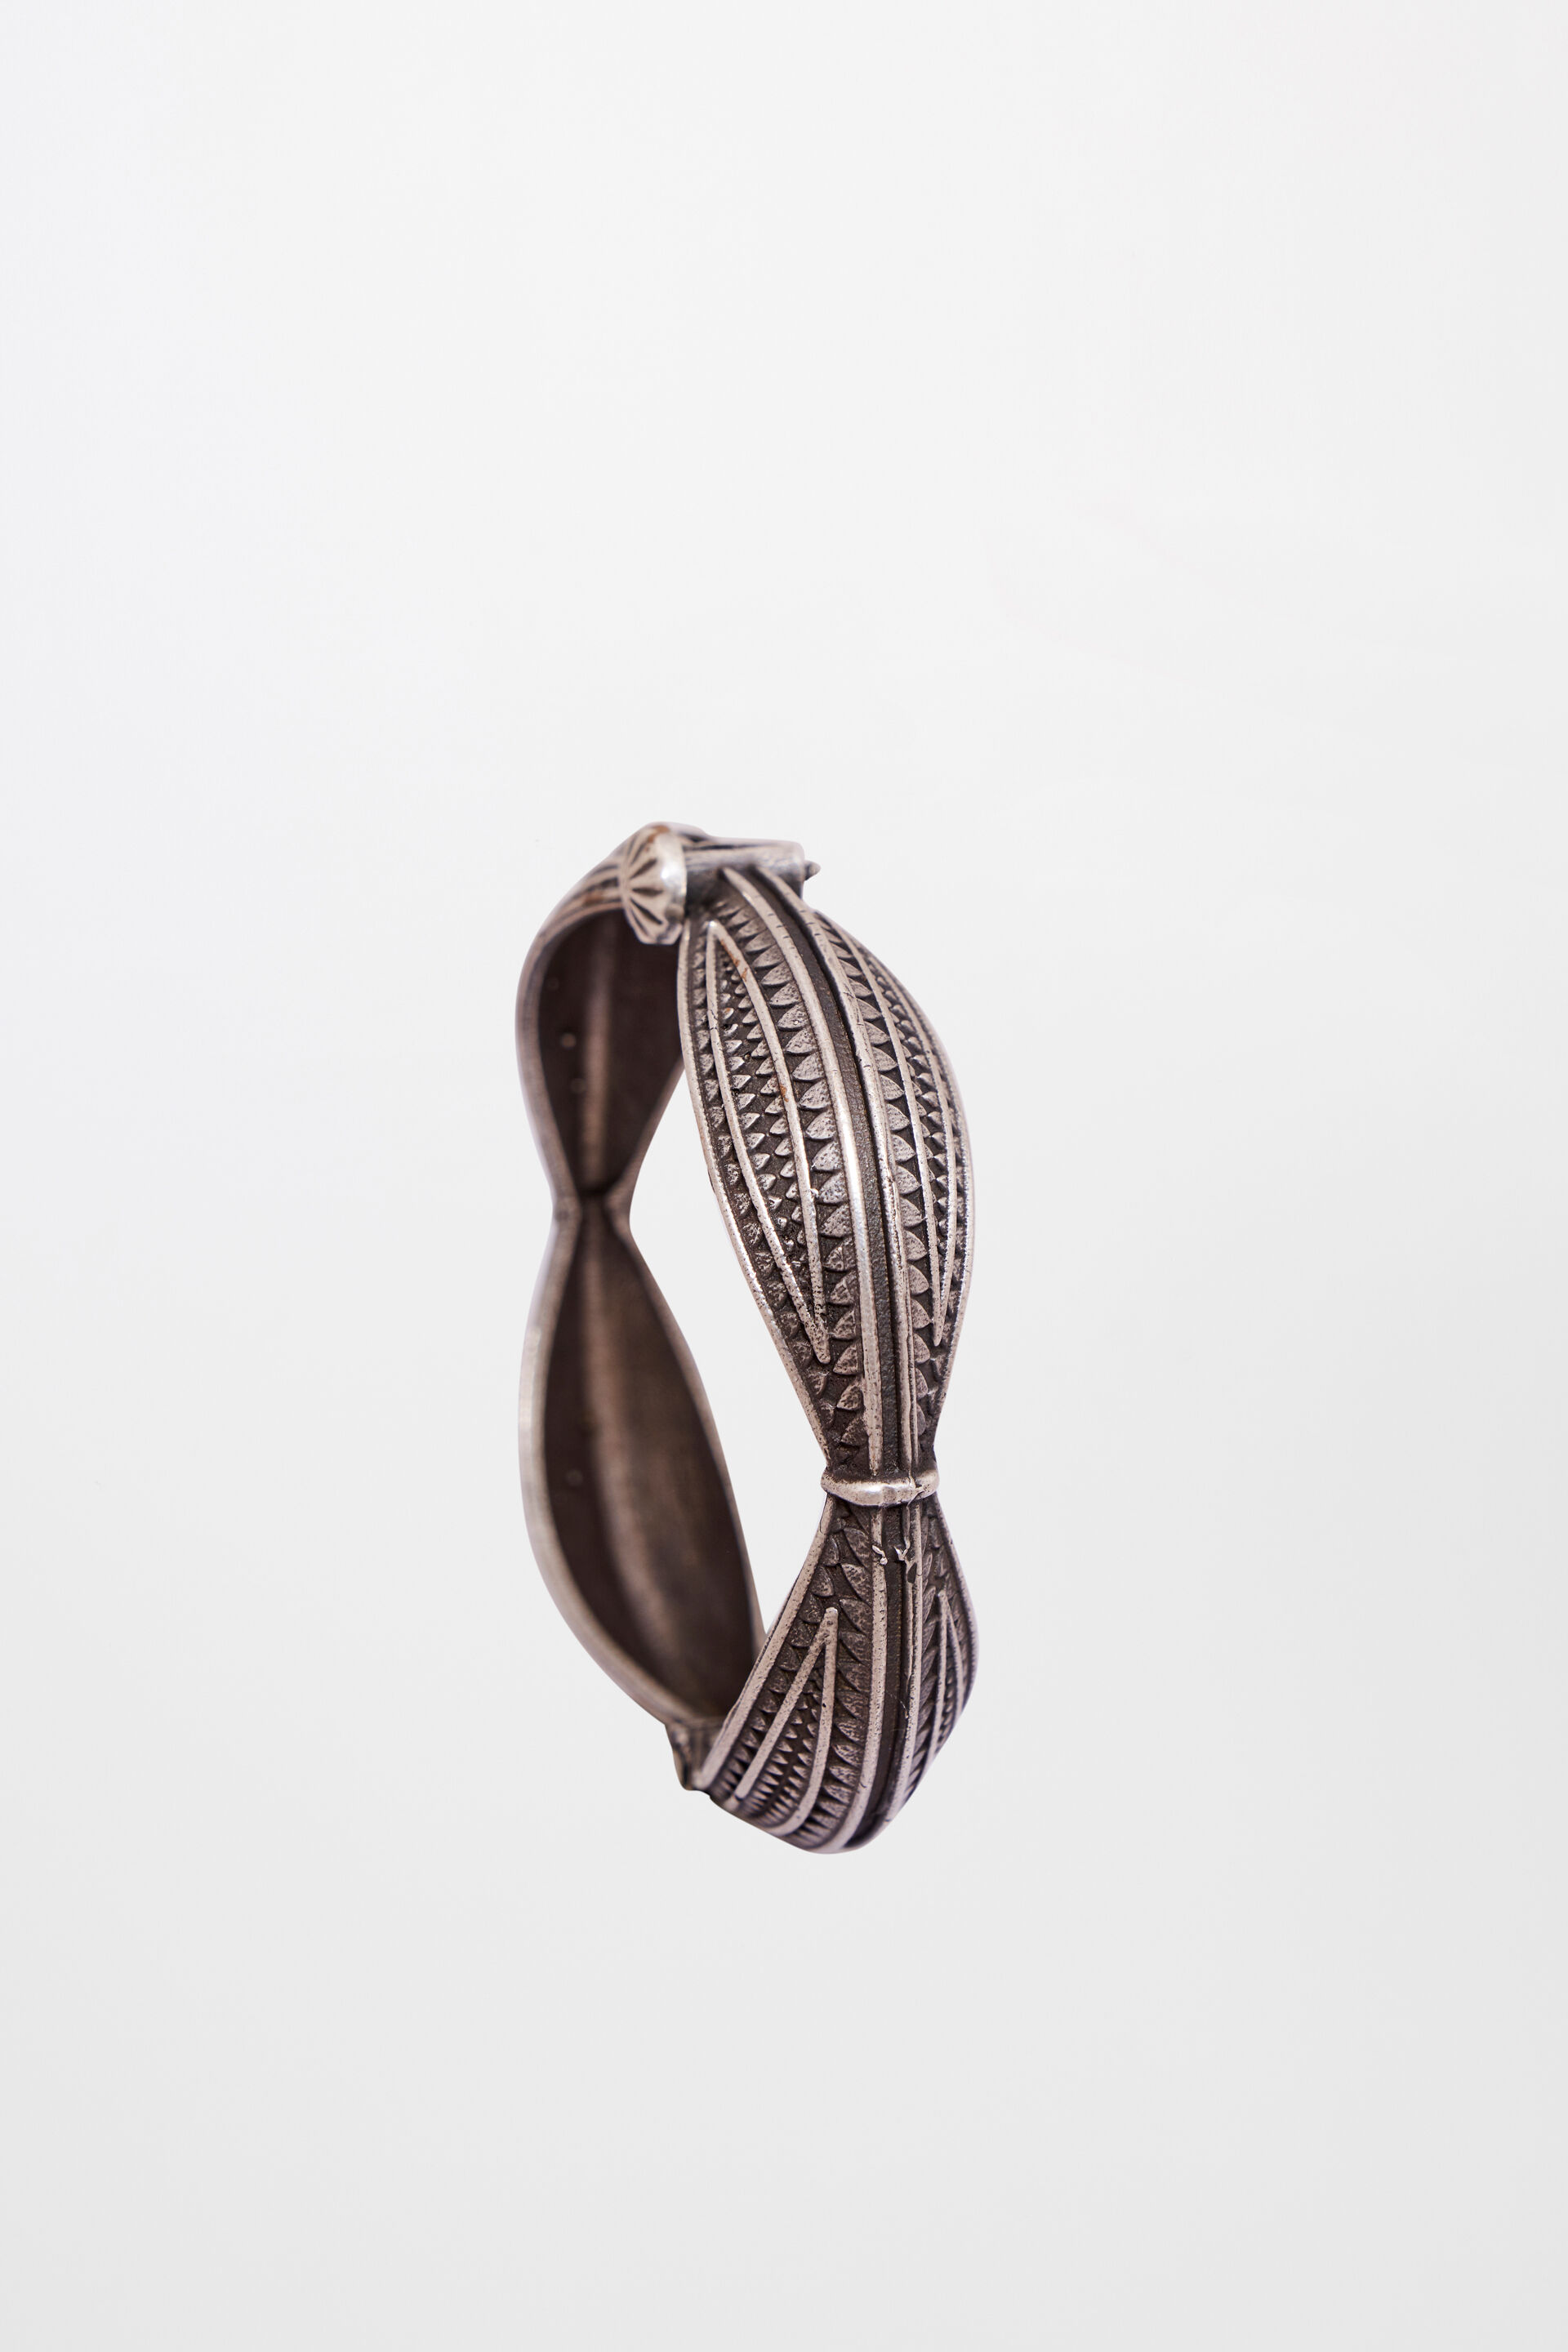 Buy Silver Alloy Bracelets After Six Wear Online at Best Price | Cbazaar